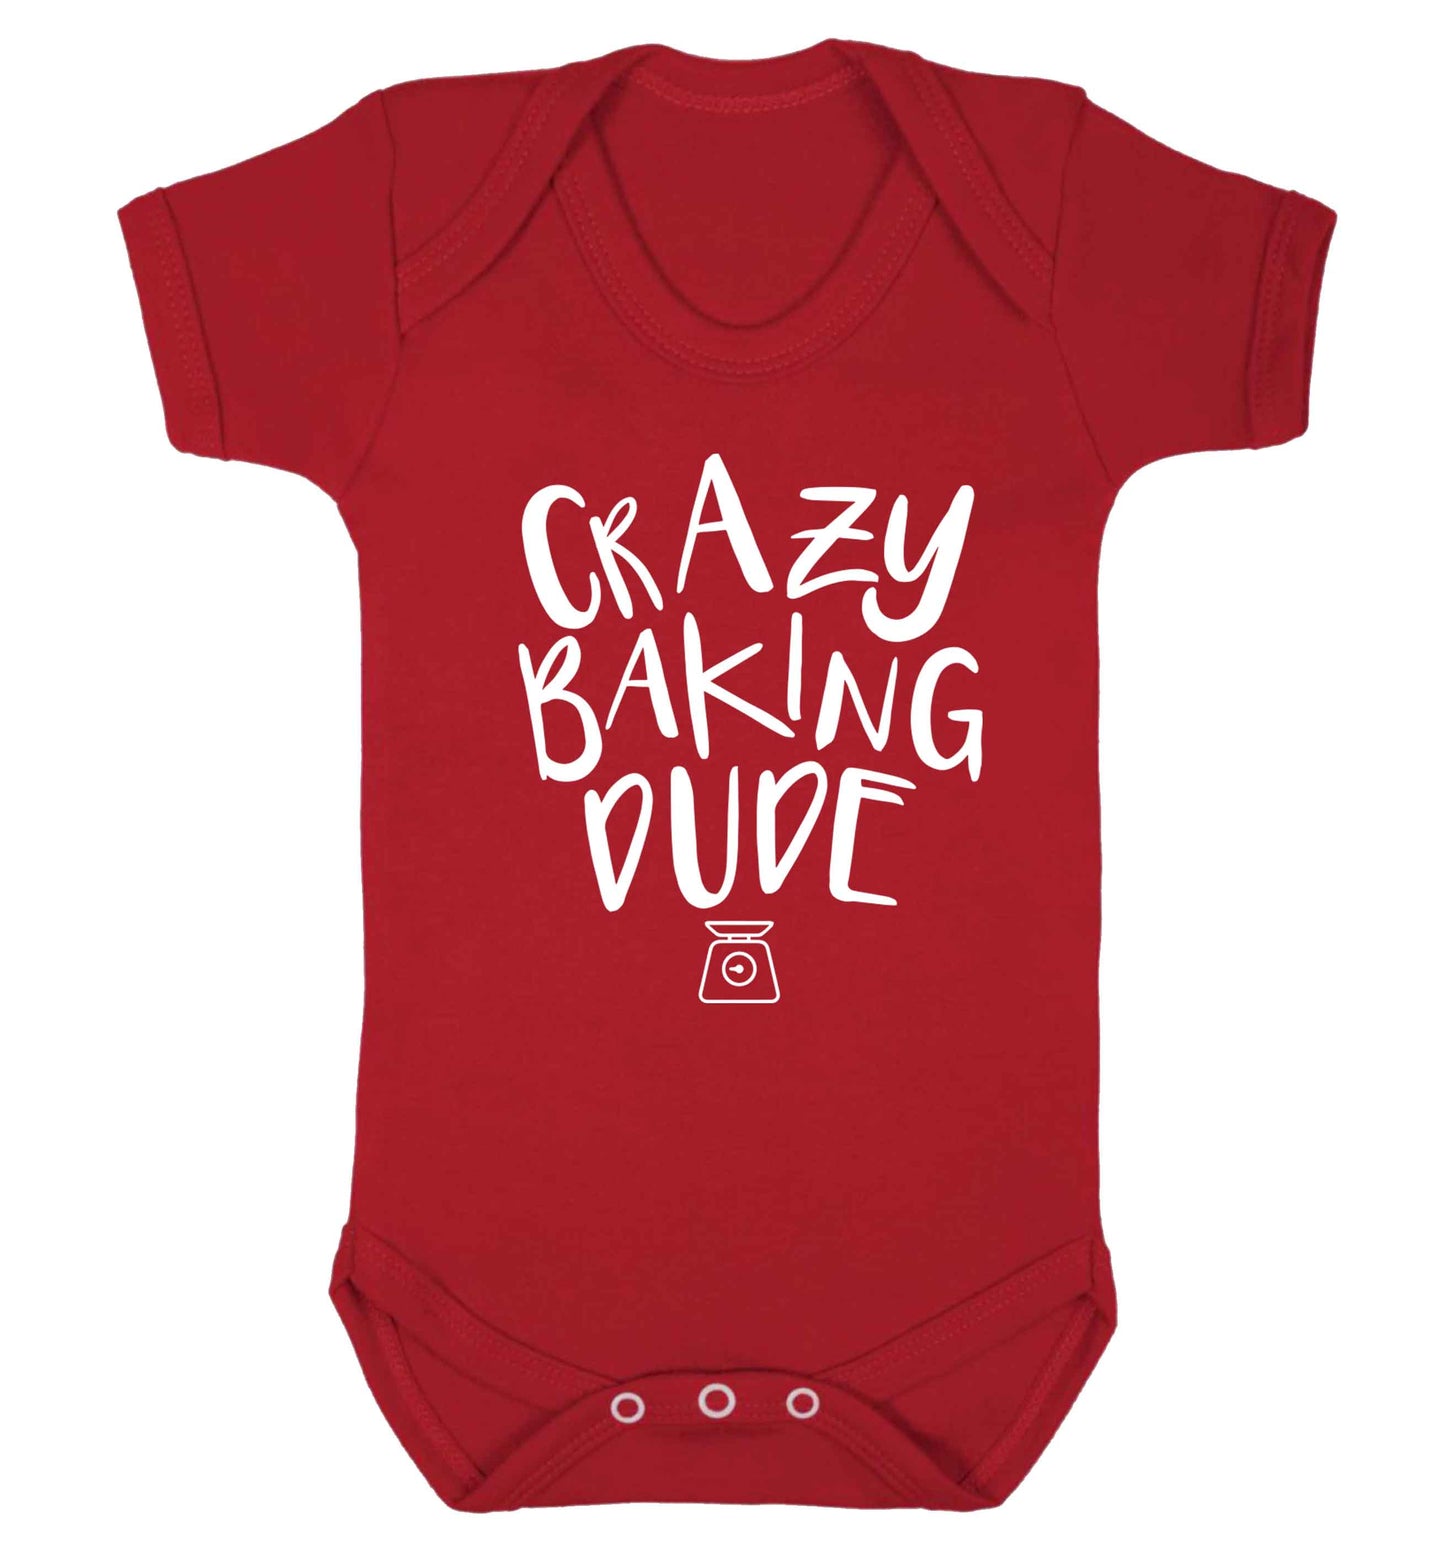 Crazy baking dude Baby Vest red 18-24 months